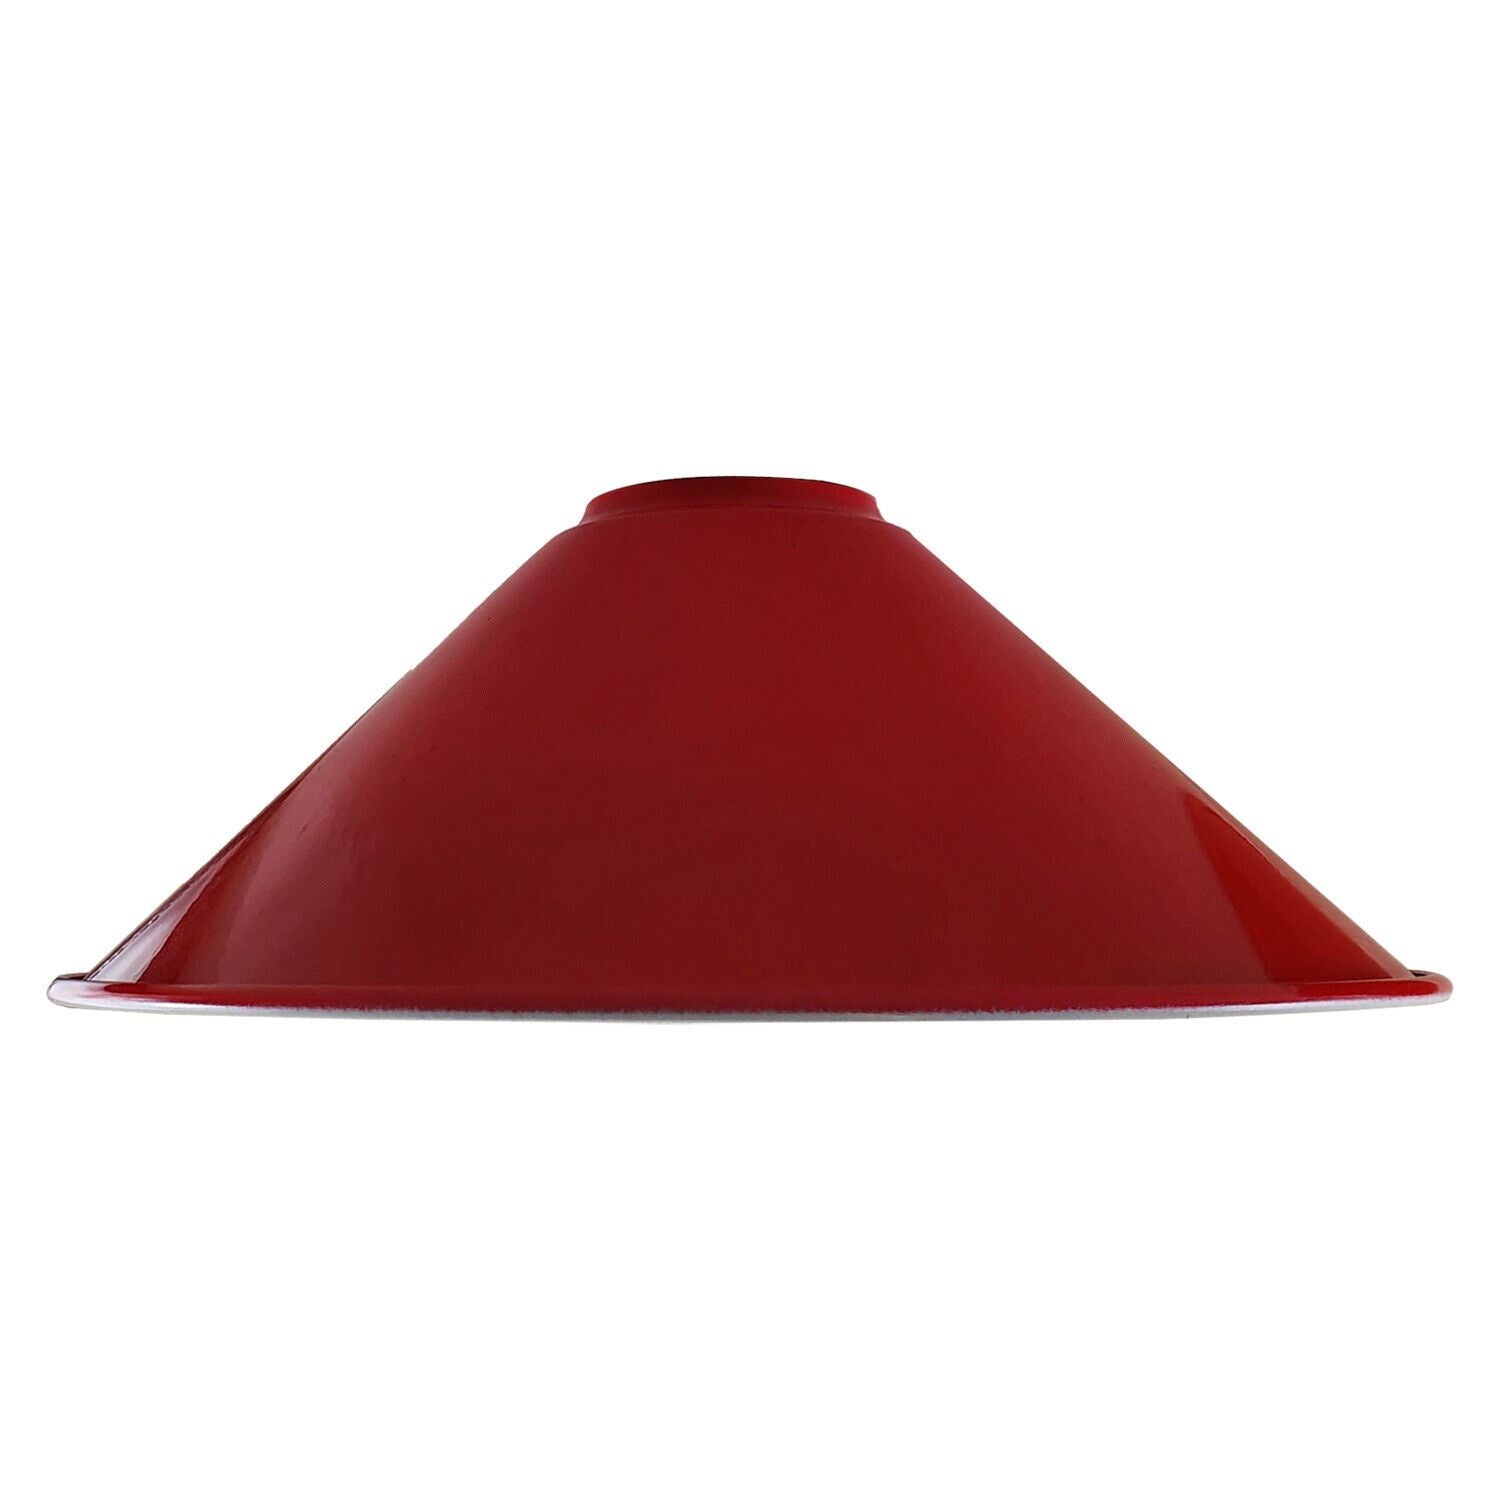 Red Cone Lamp Shade.JPG